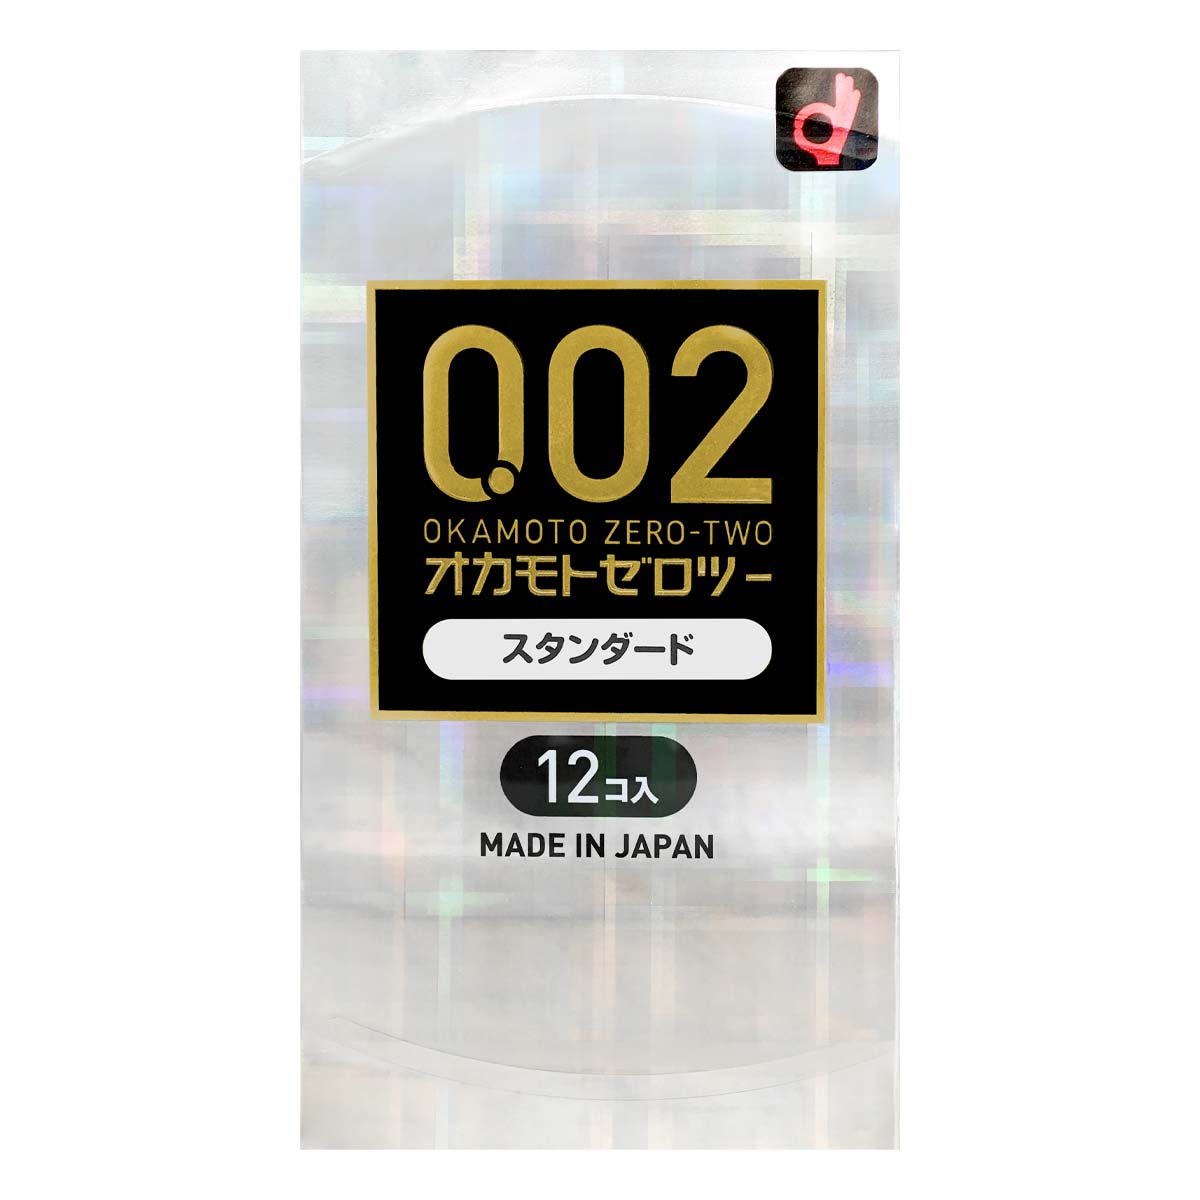 Okamoto Unified Thinness 0.02EX (Japan Edition) 12's Pack PU Condom-p_2